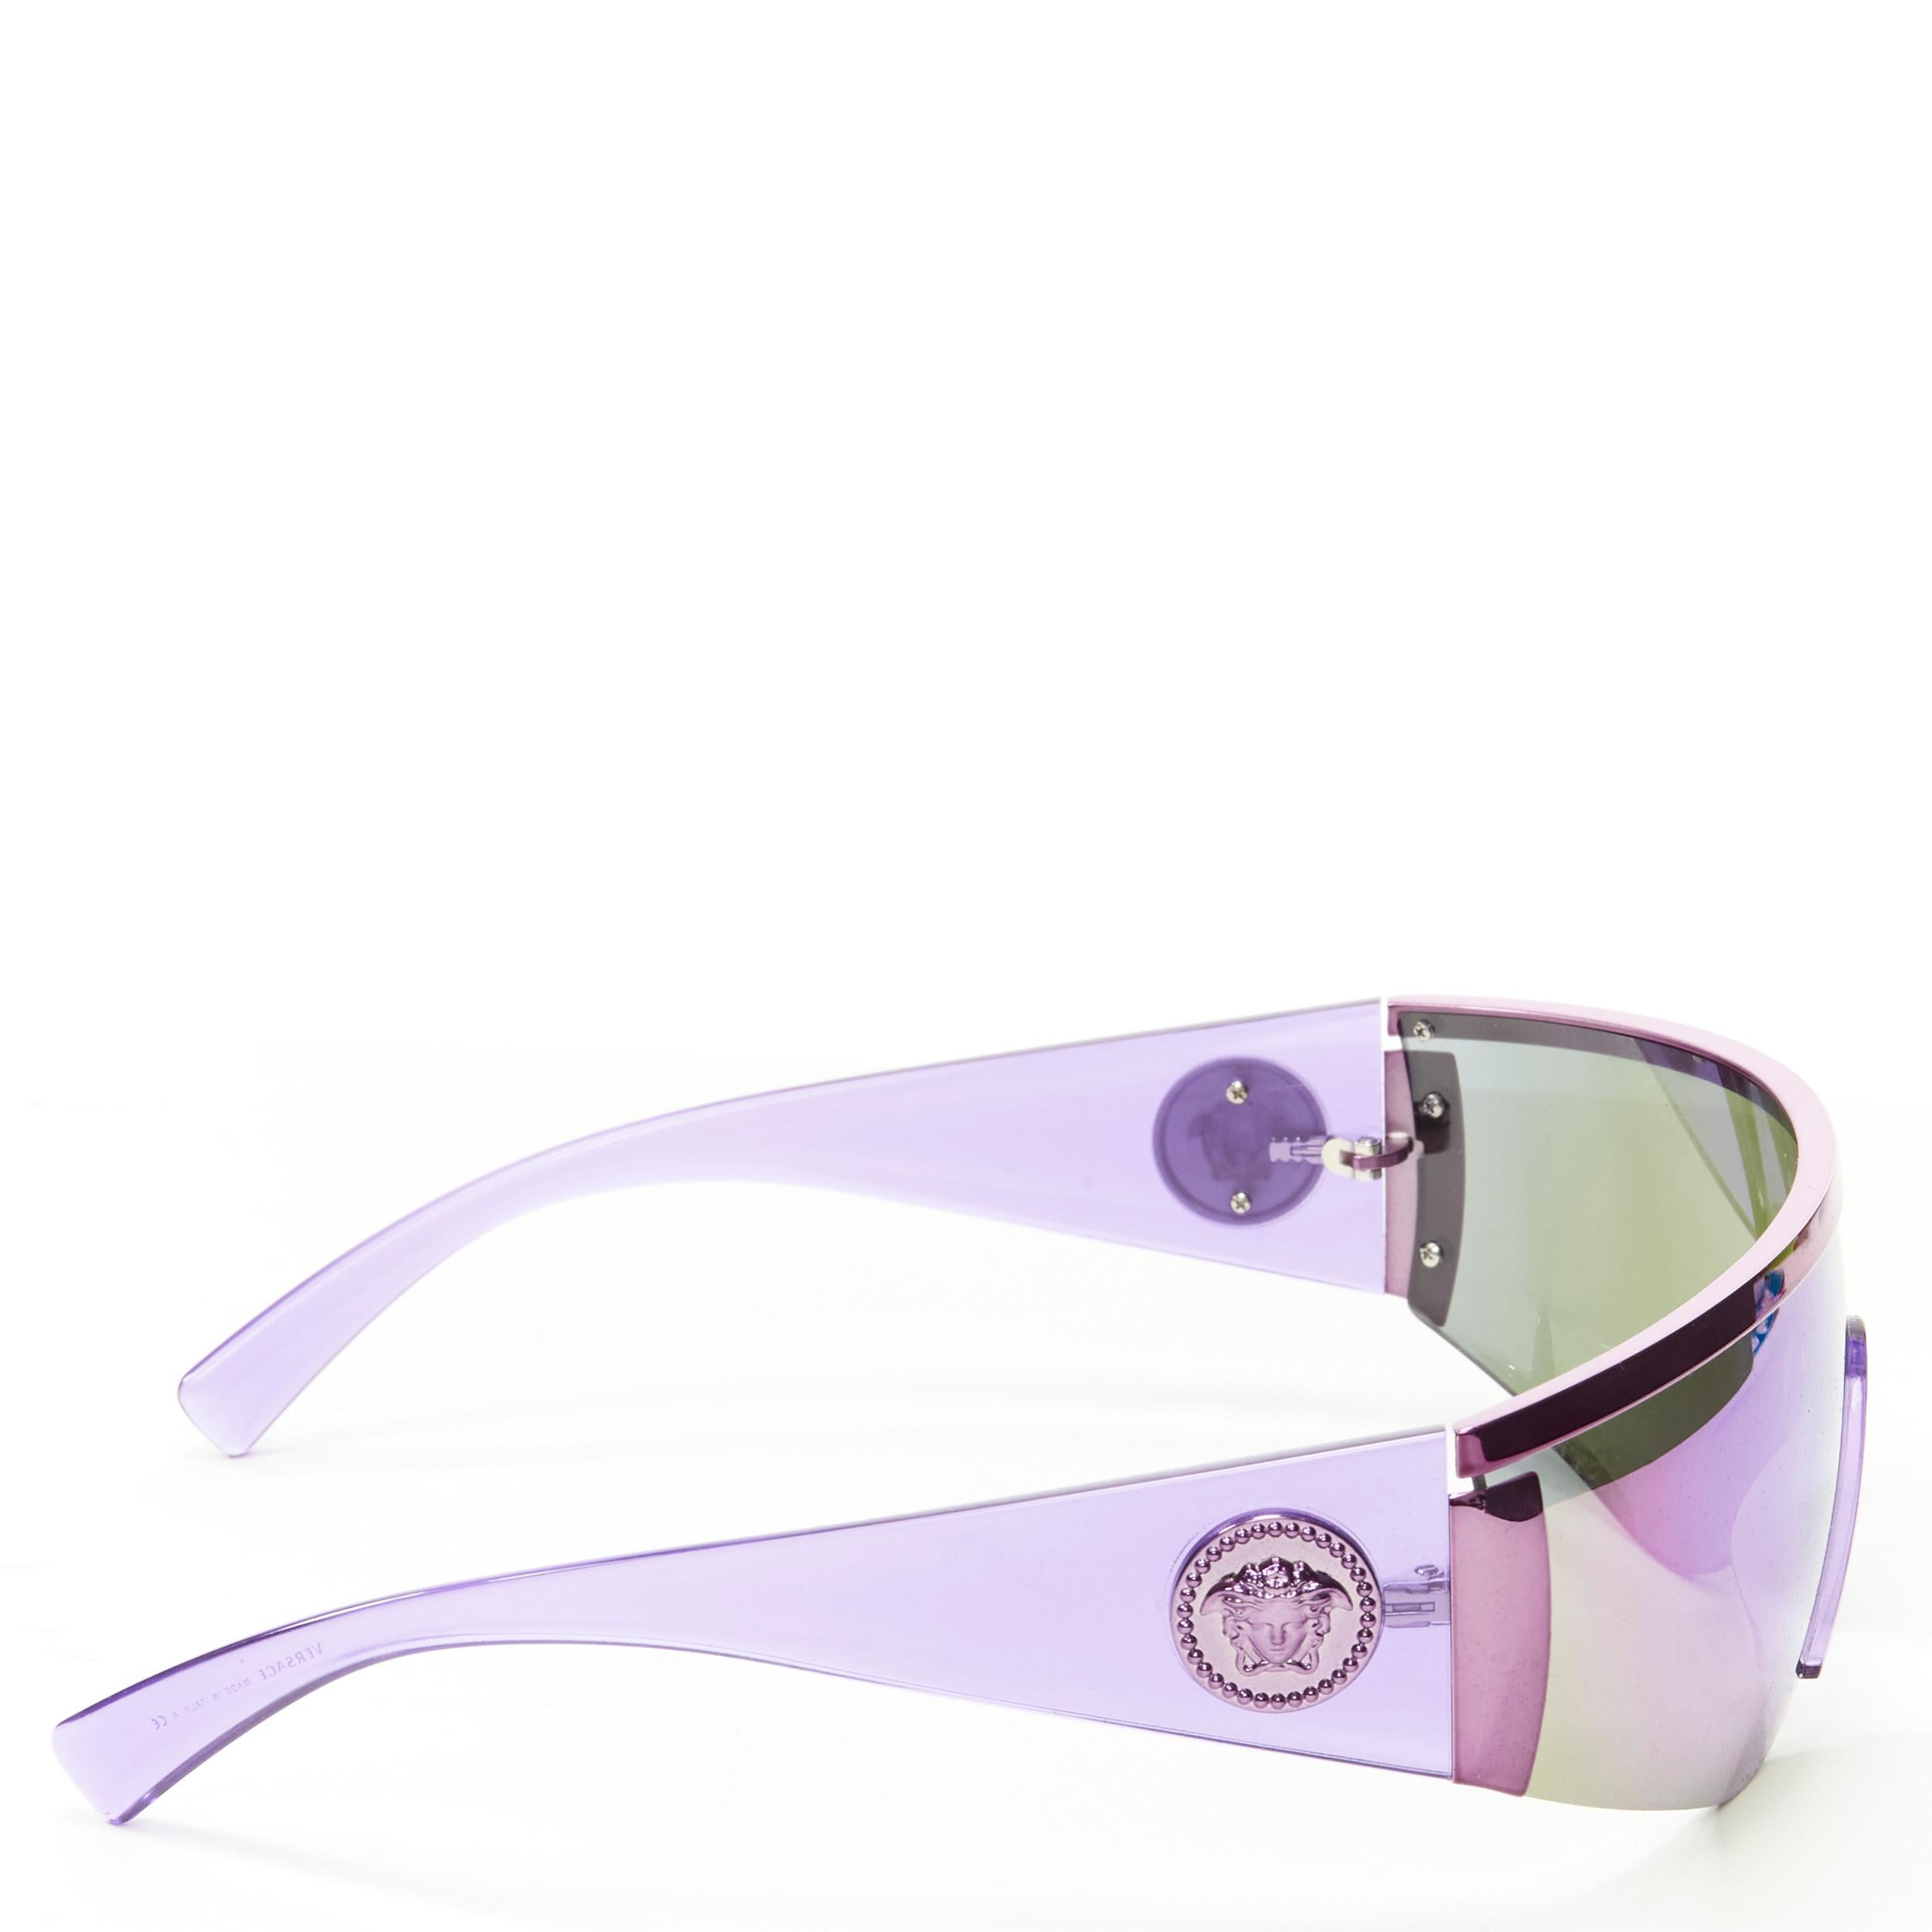 Blue new VERSACE Tribute 2018 VE2197 Medusa purple blue mirrored shield sunglasses